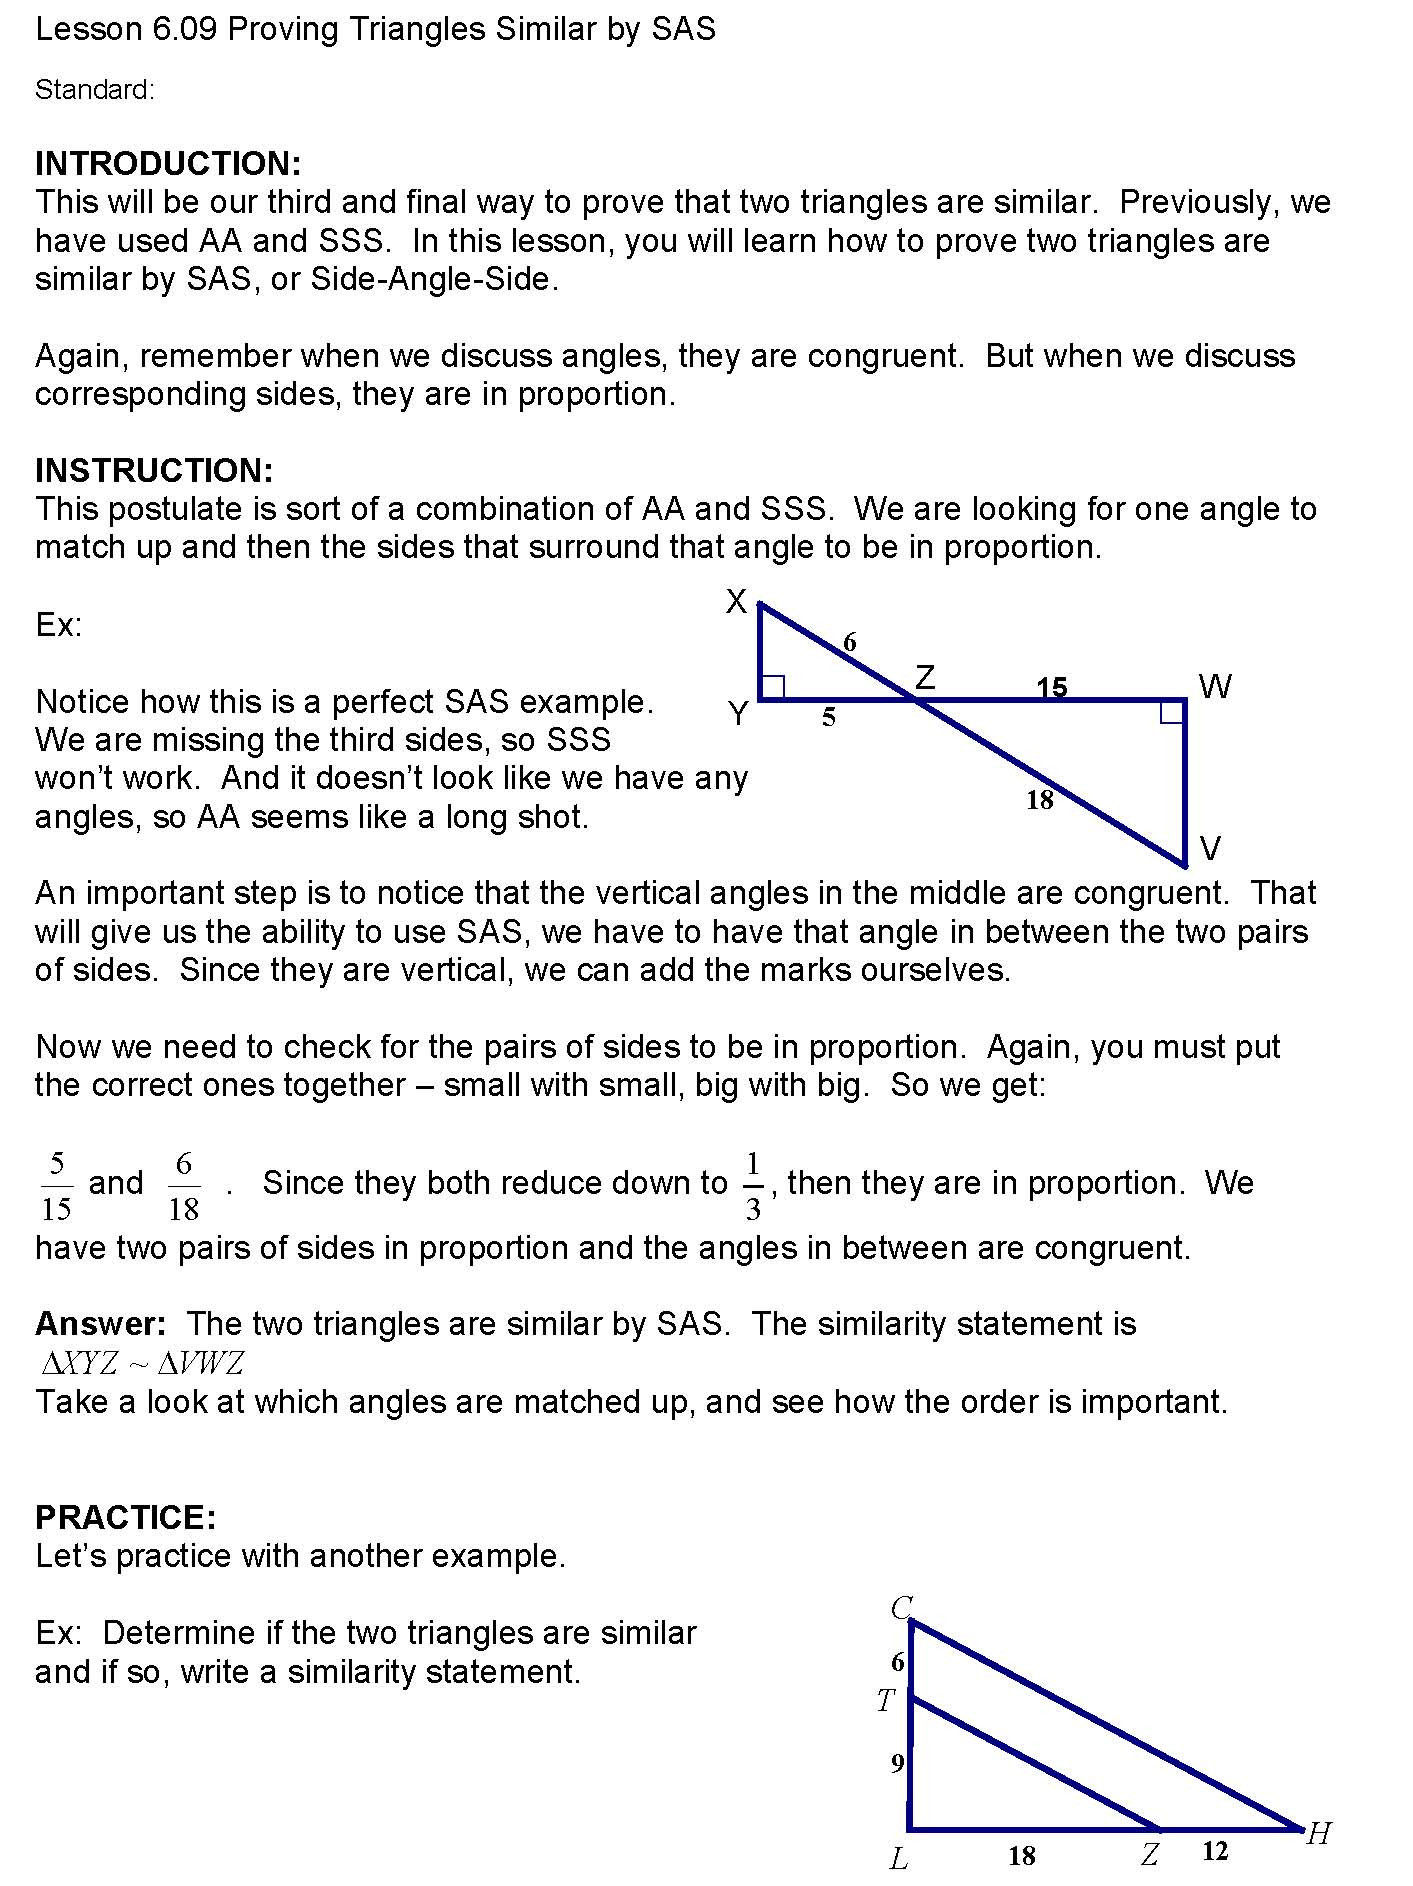 Proving Triangles Similar Worksheet Cosgeometry Lesson 6 09 Proving Triangles Similar by Sas